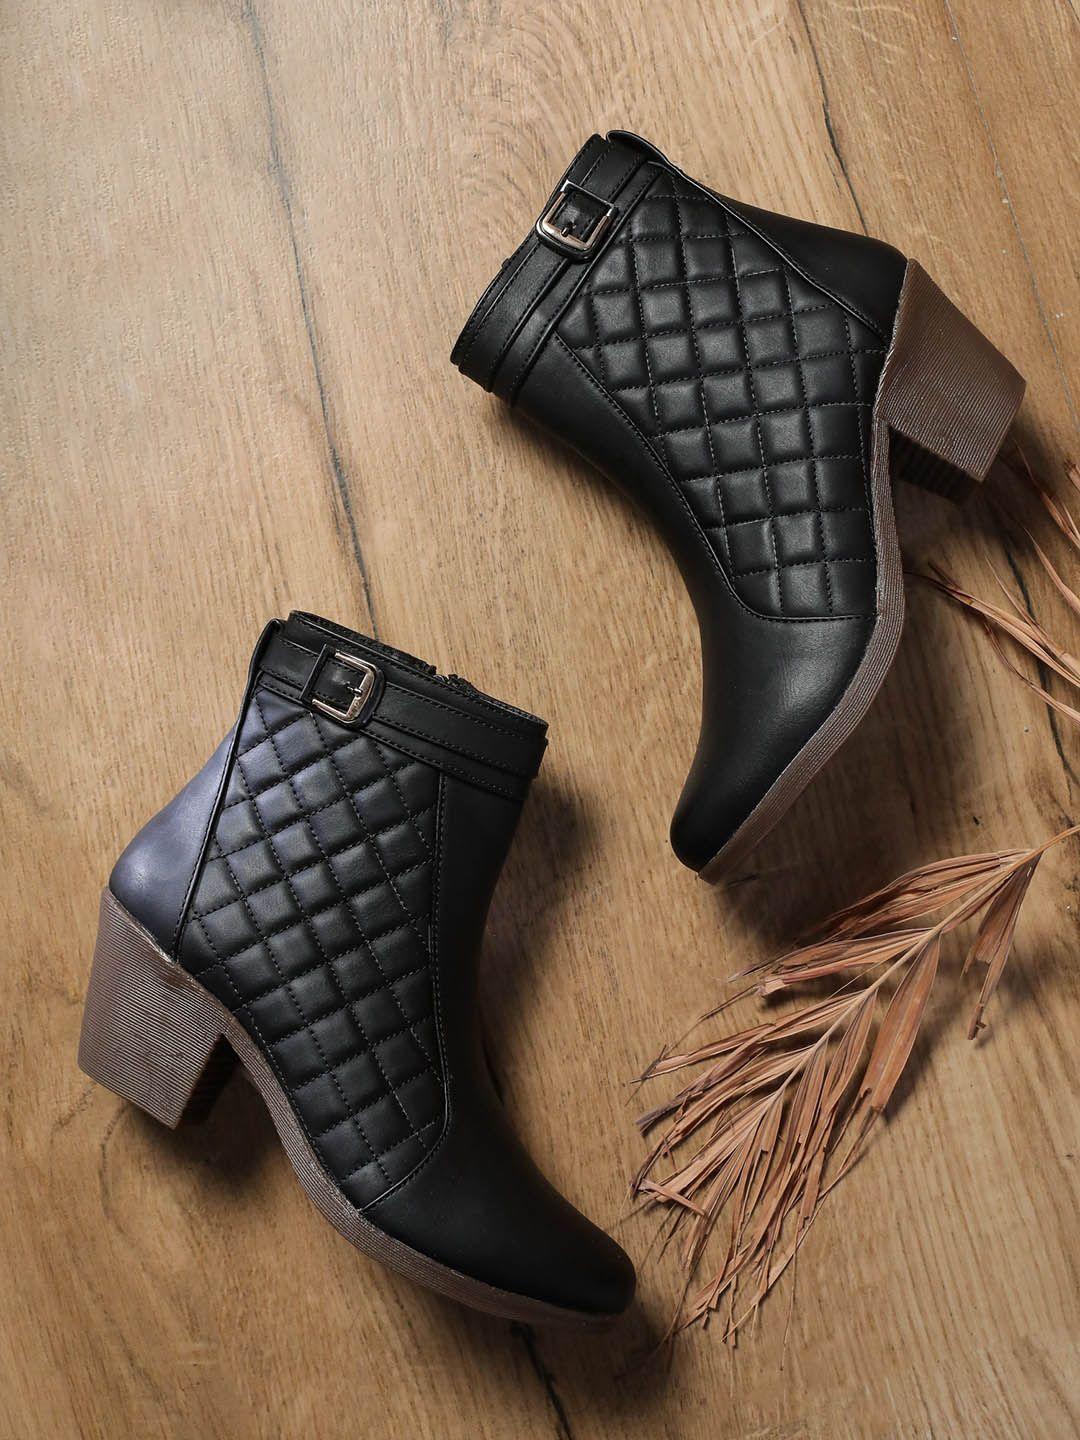 everly women black woven design quilted regular boots